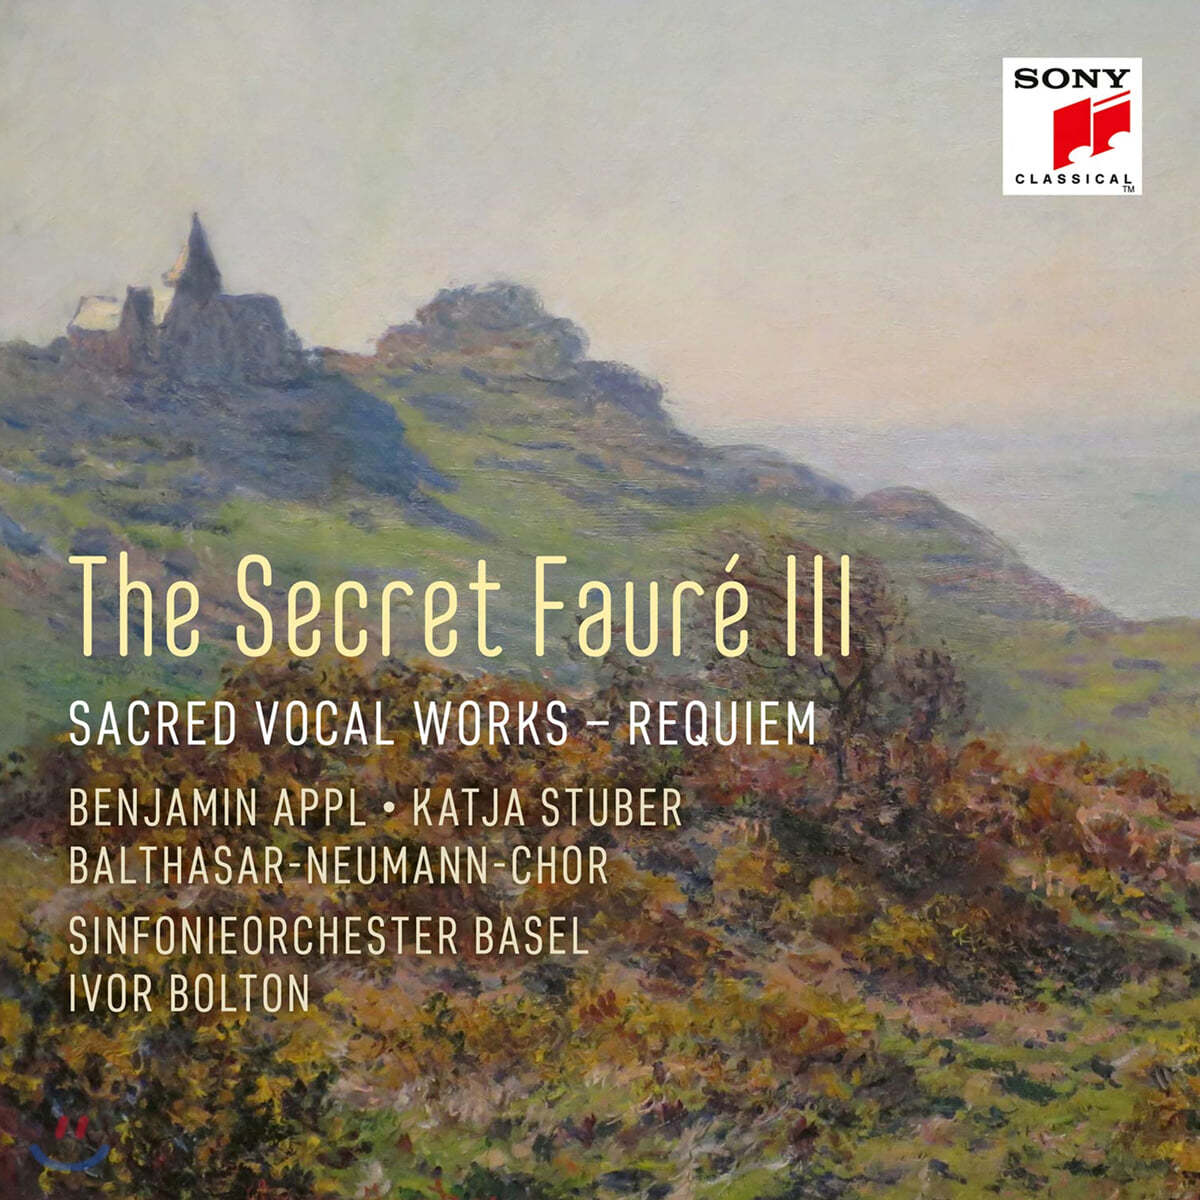 Ivor Bolton 포레: 종교 성악 작품집 - 시크릿 포레 3집 (The Secret Faure 3 - Sacred Vocal Works - Requiem)